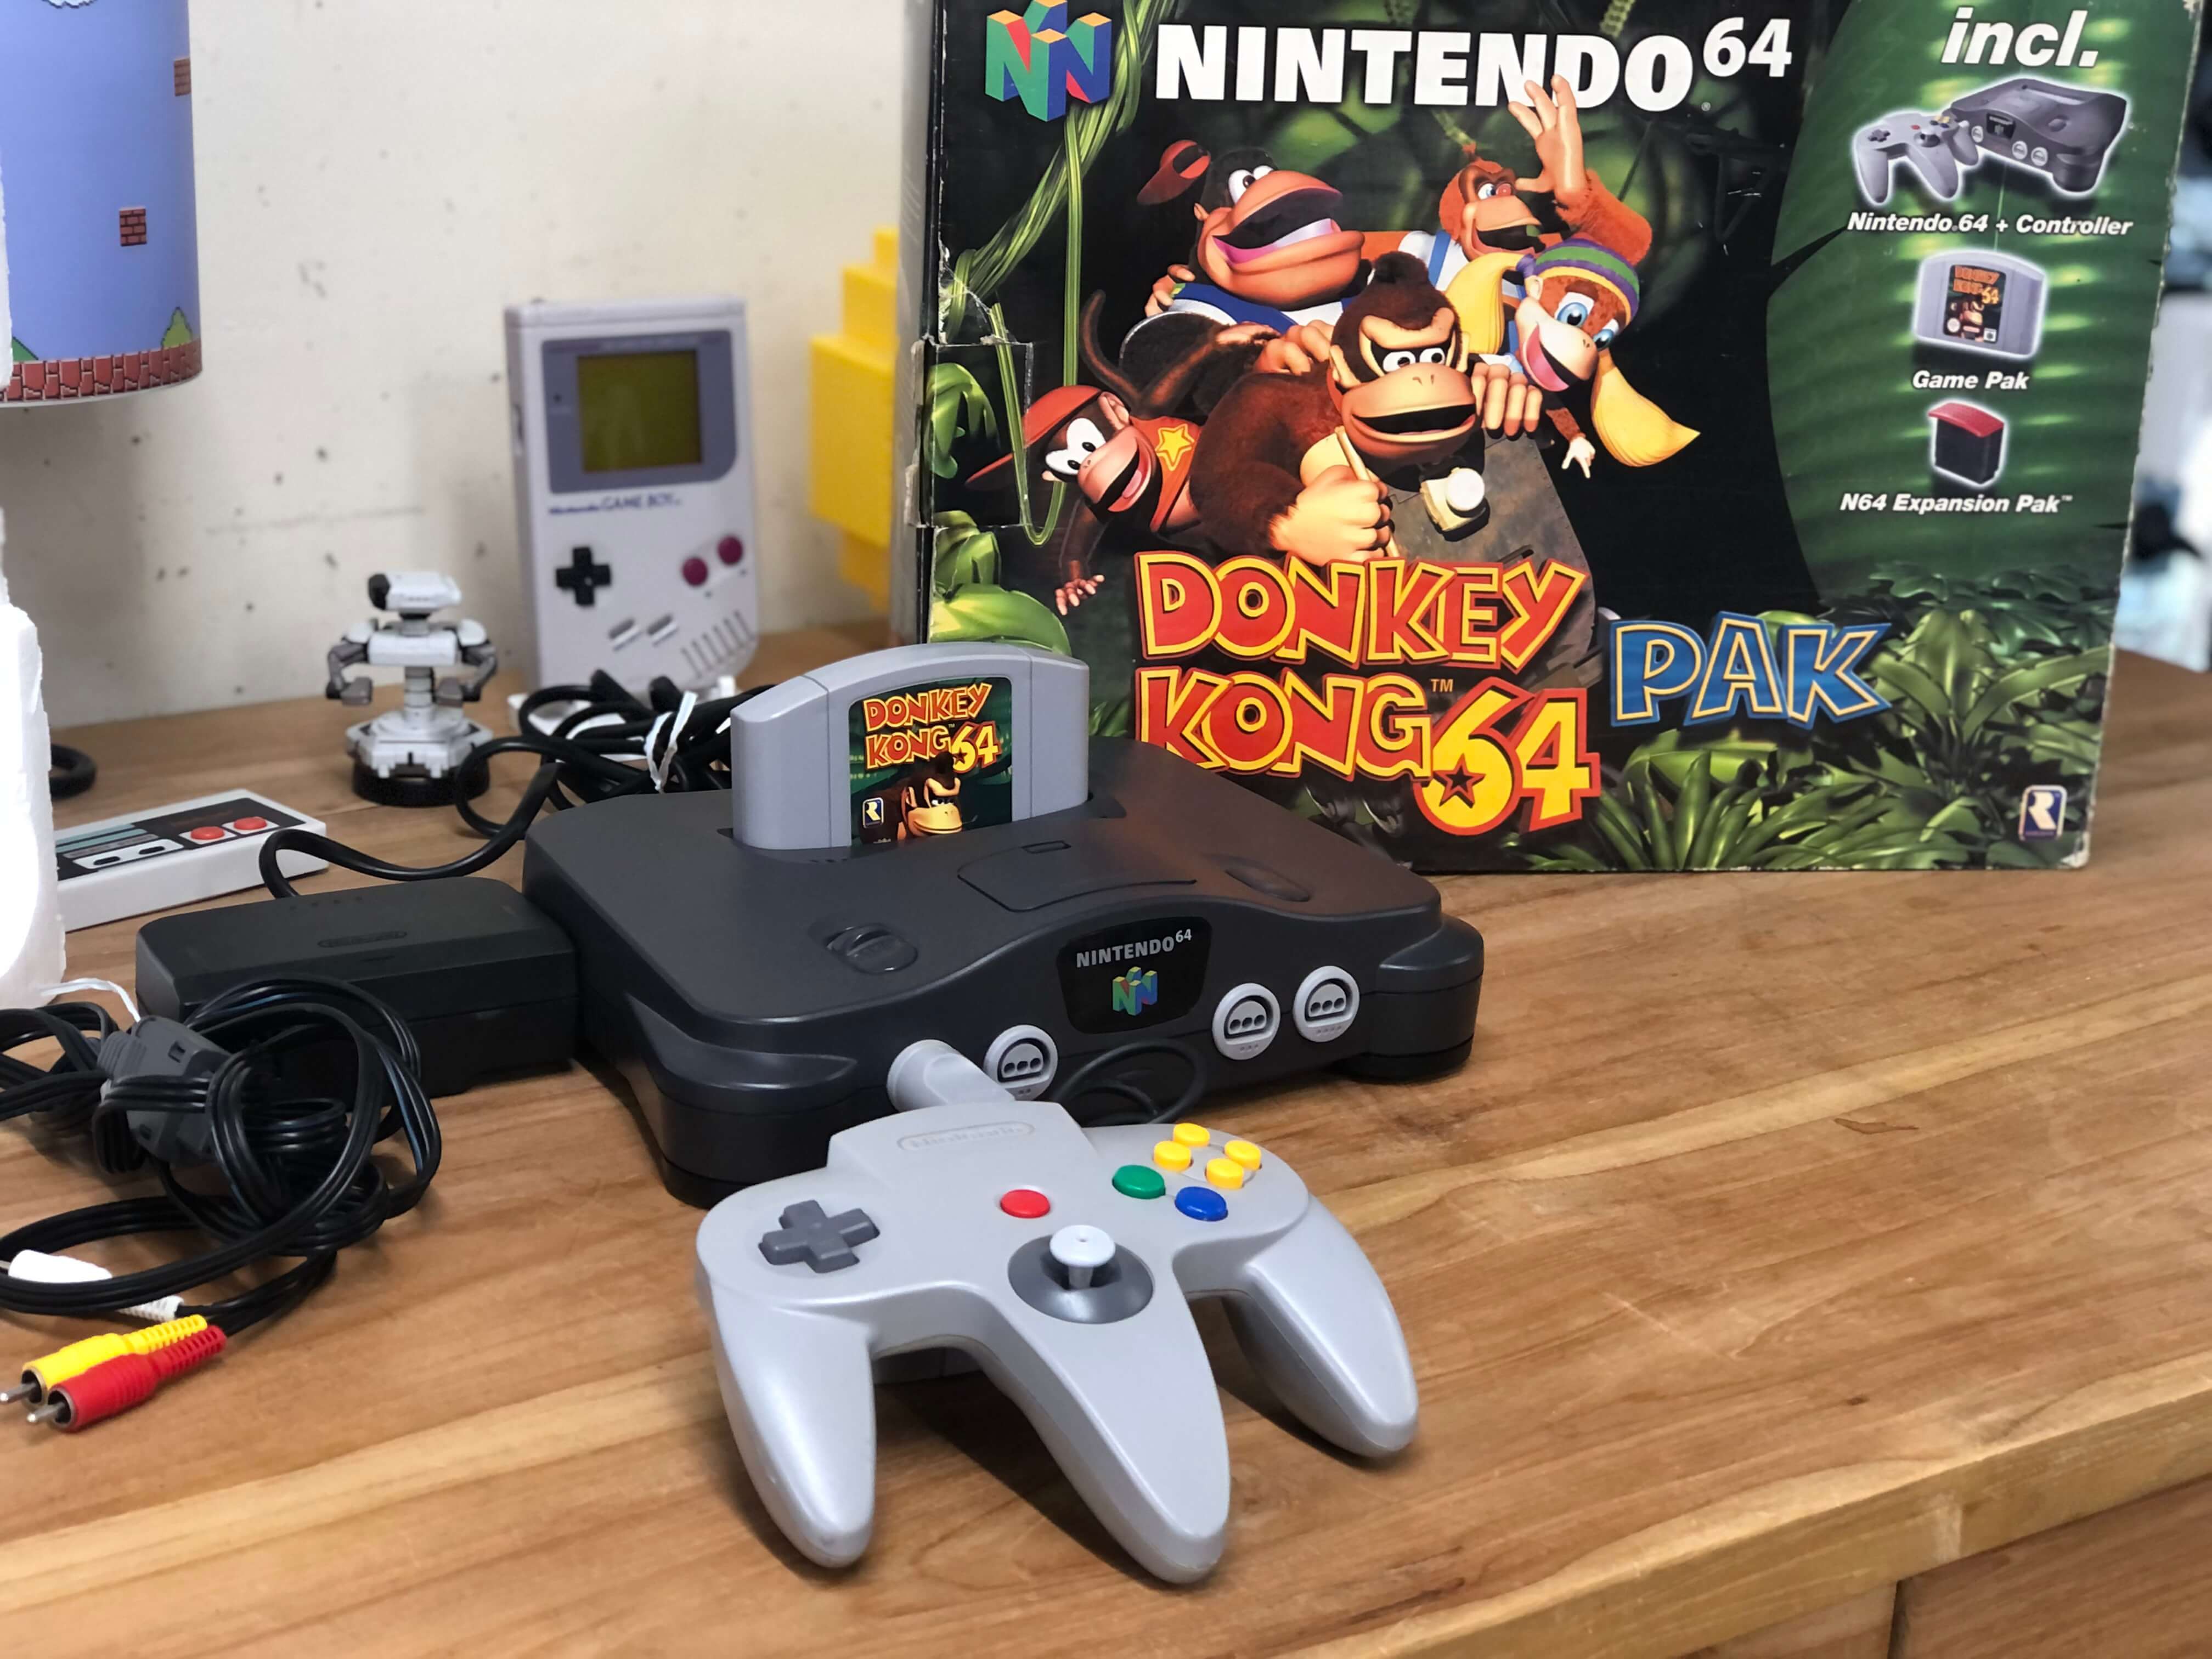 Nintendo 64 Starter Pack - Donkey Kong Edition [Complete] - Nintendo 64 Hardware - 6